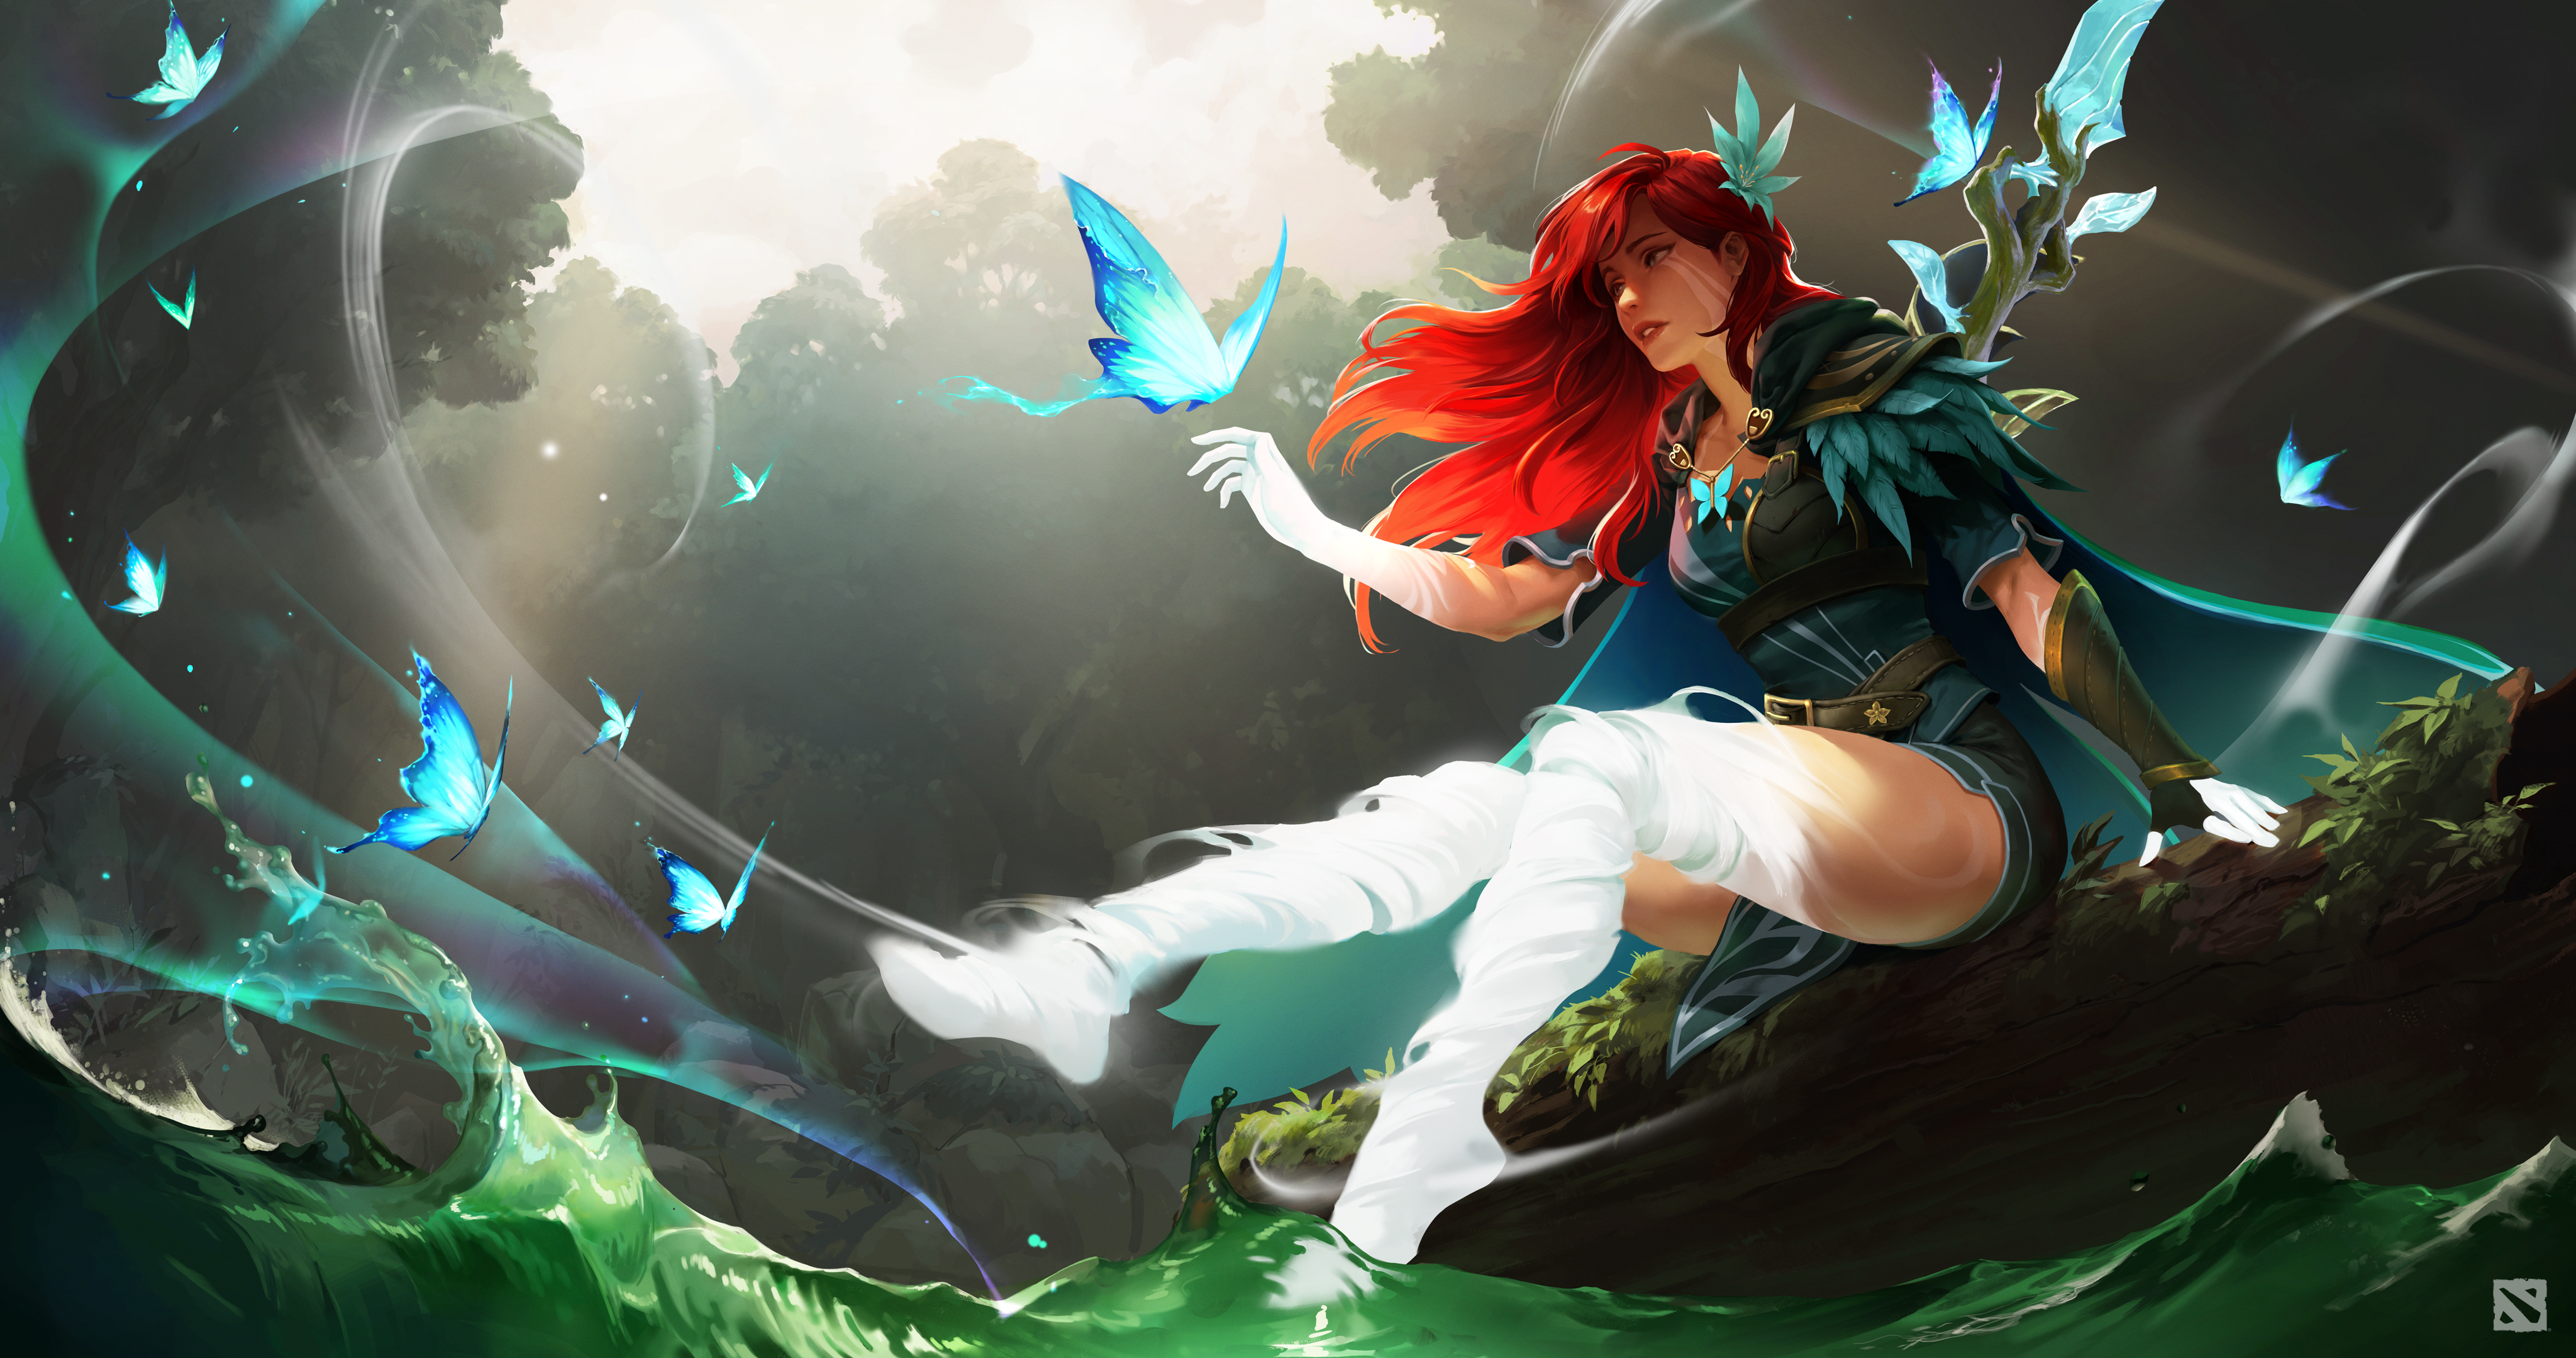 Digital Art Fantasy Art Fantasy Girl Redhead Butterflies Forest Wands Dota 2 Windranger 4096x2160